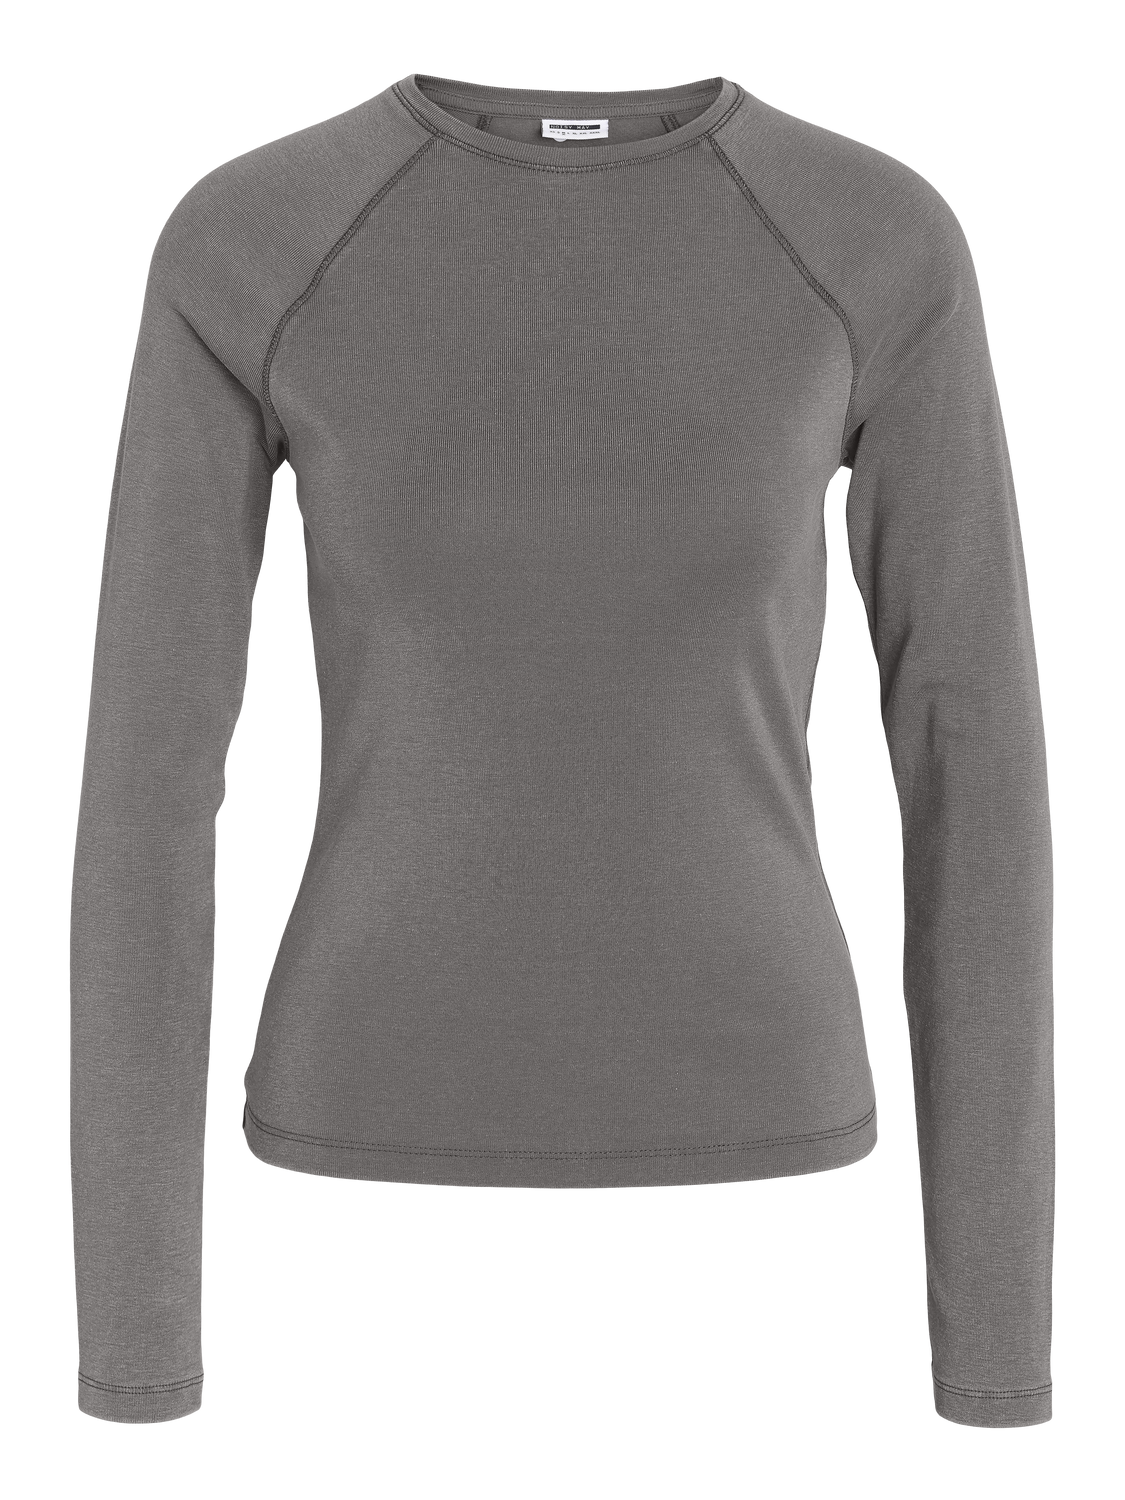 NMATHEA T-Shirt - Charcoal Gray